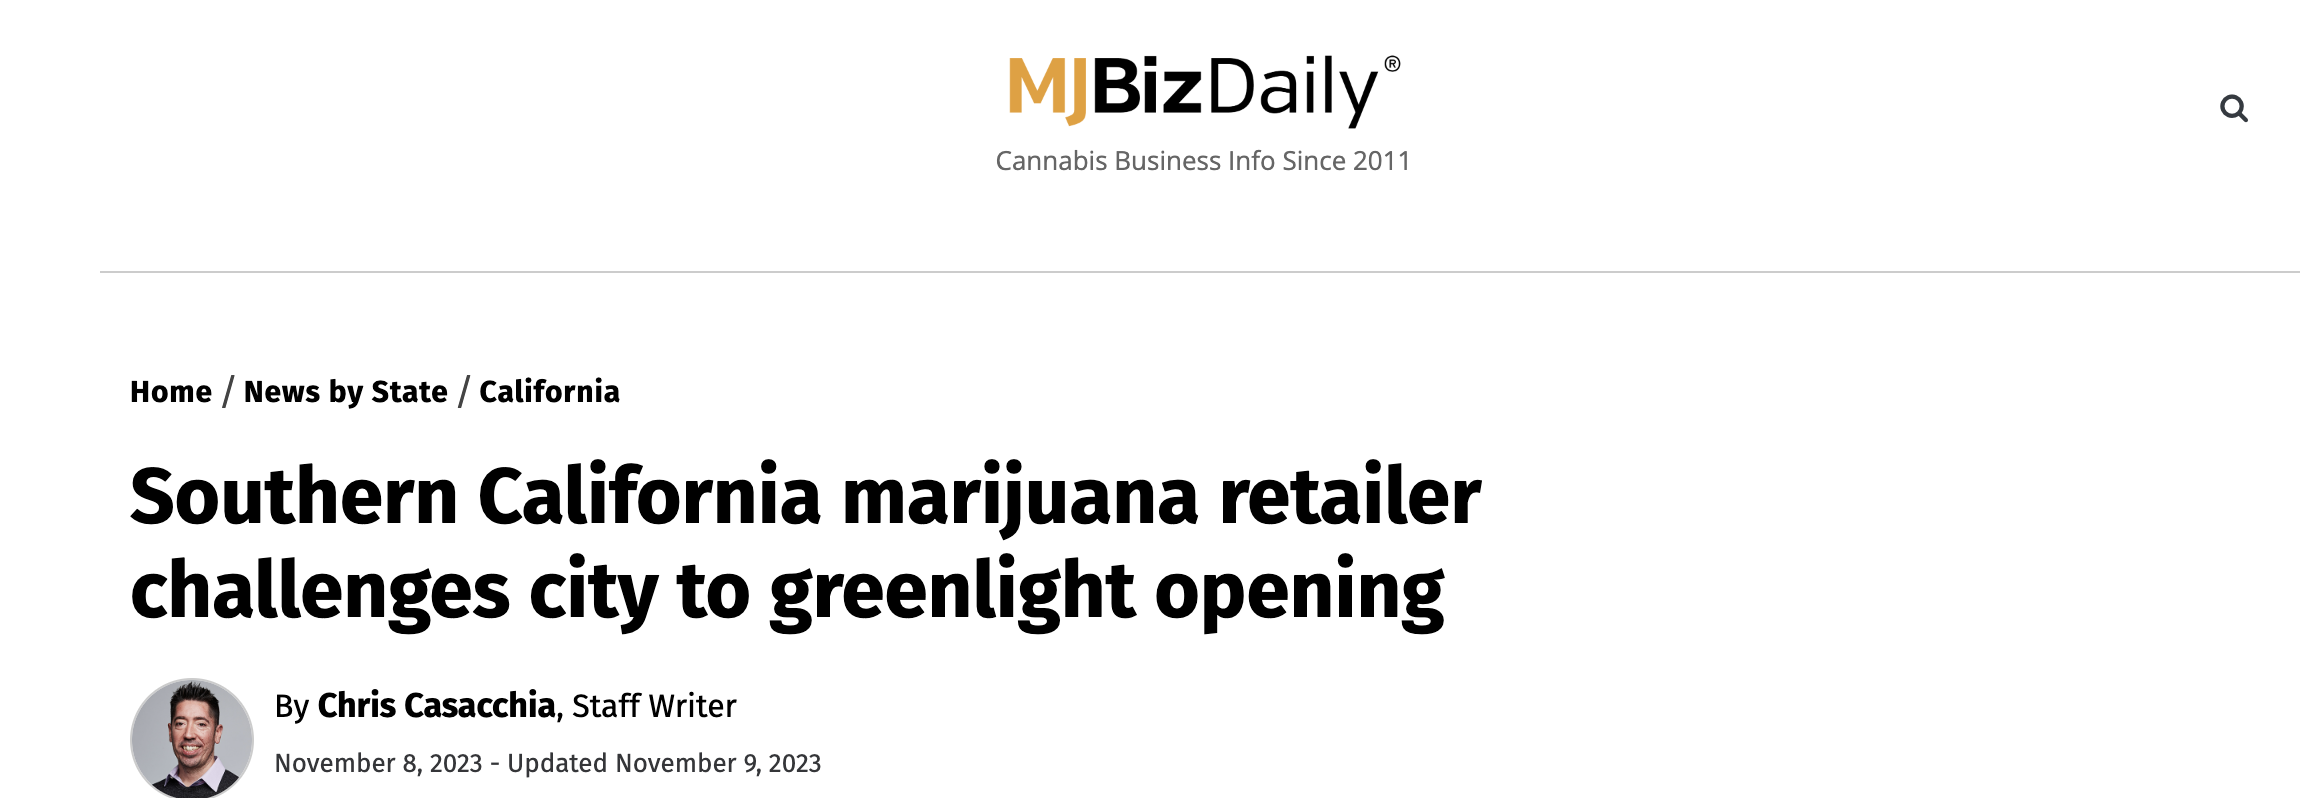 MJ Biz headline about California based cannabis dispensary opening delays PR crisis management